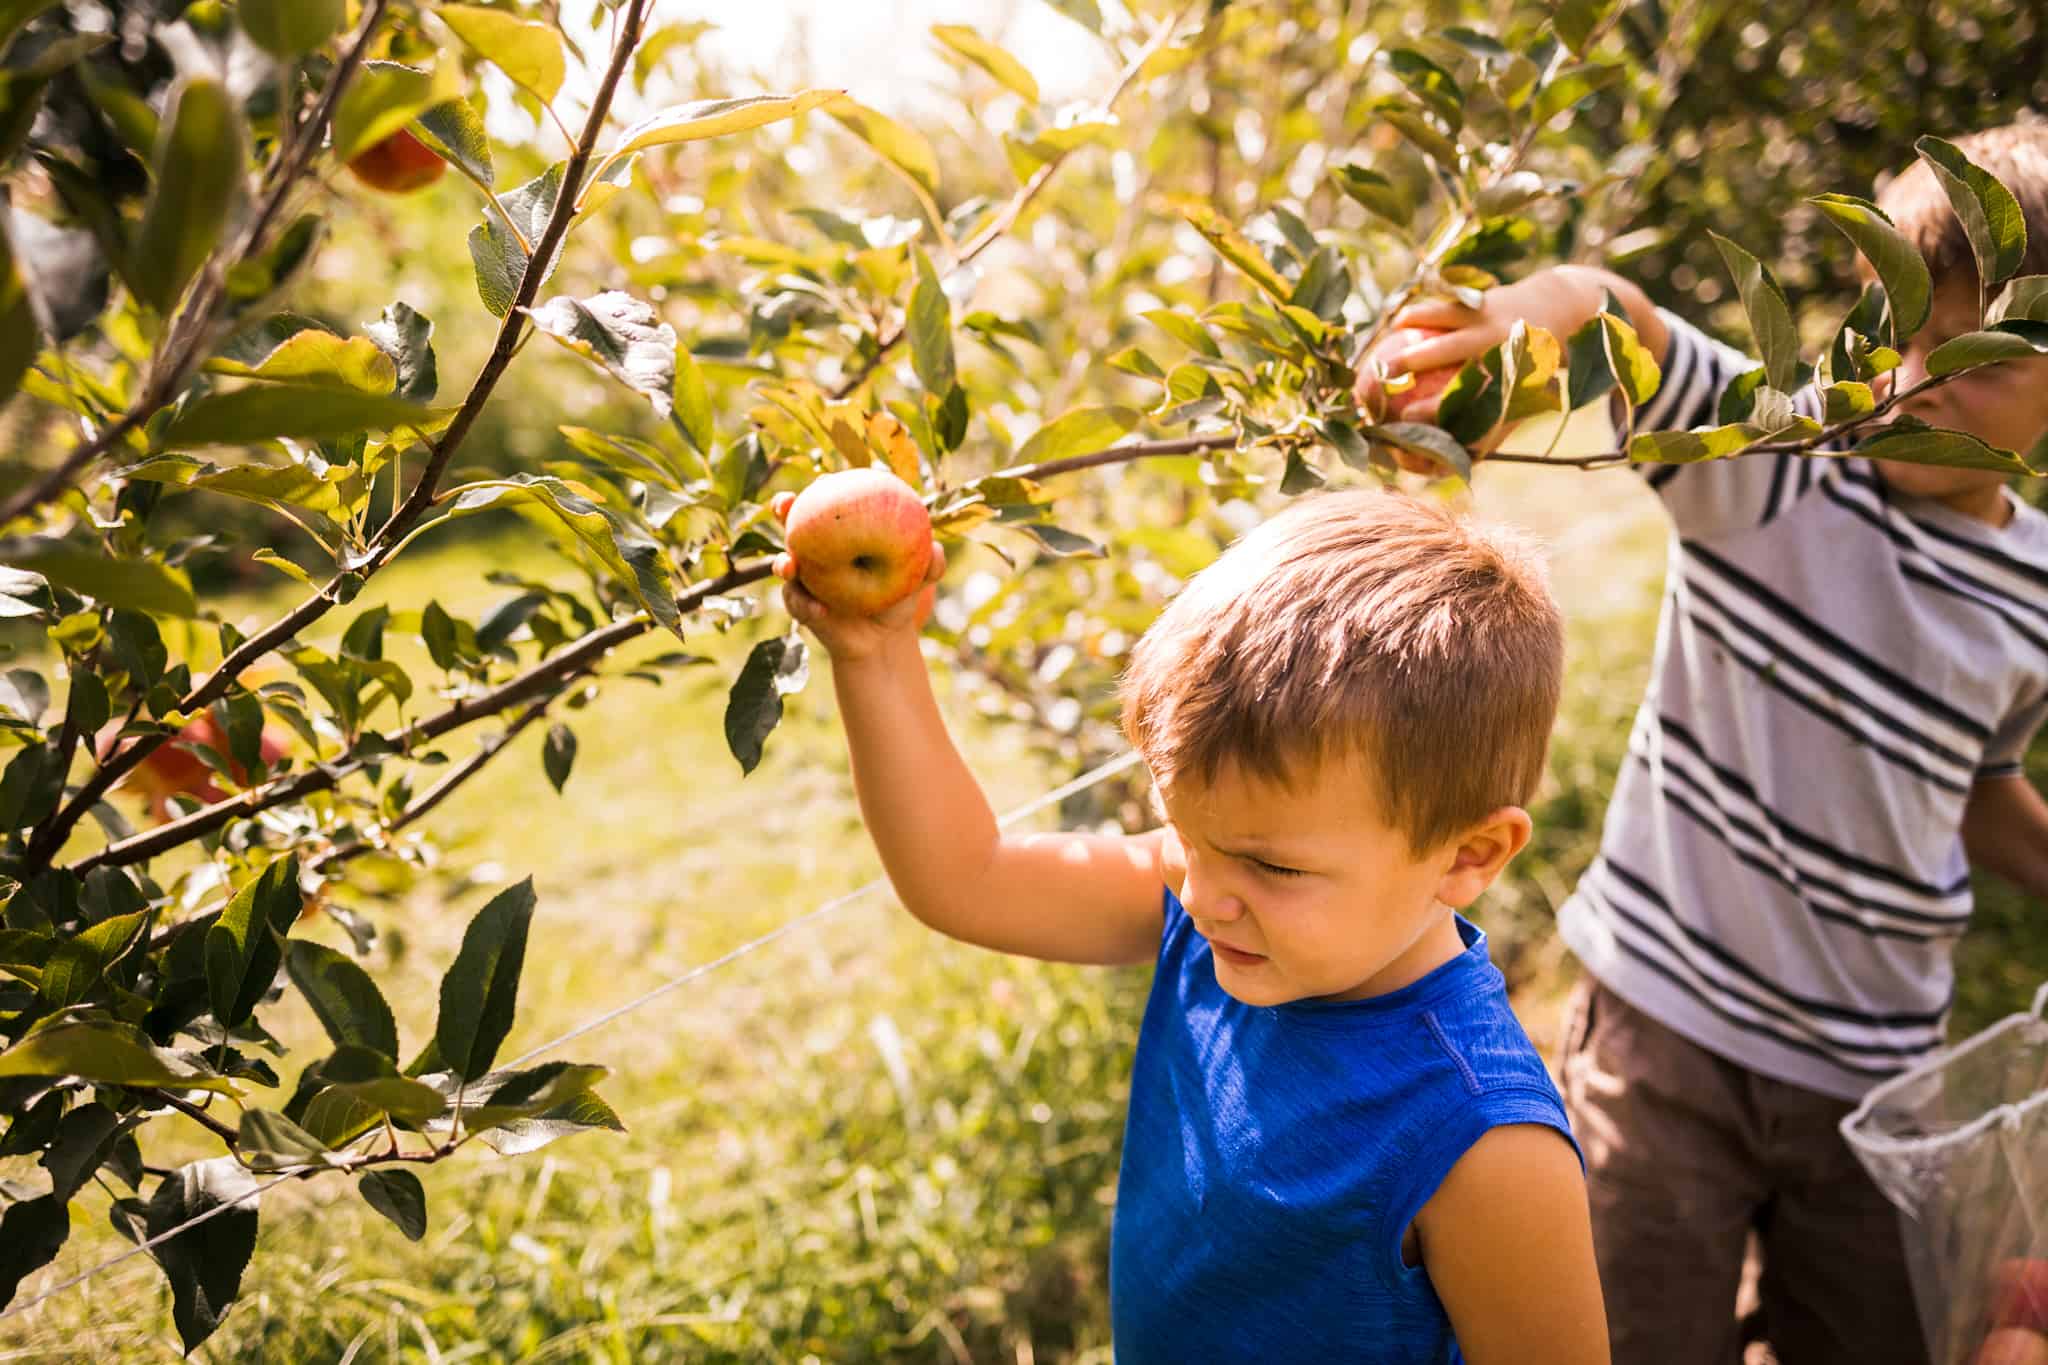 Boy in blue shirt picking apple